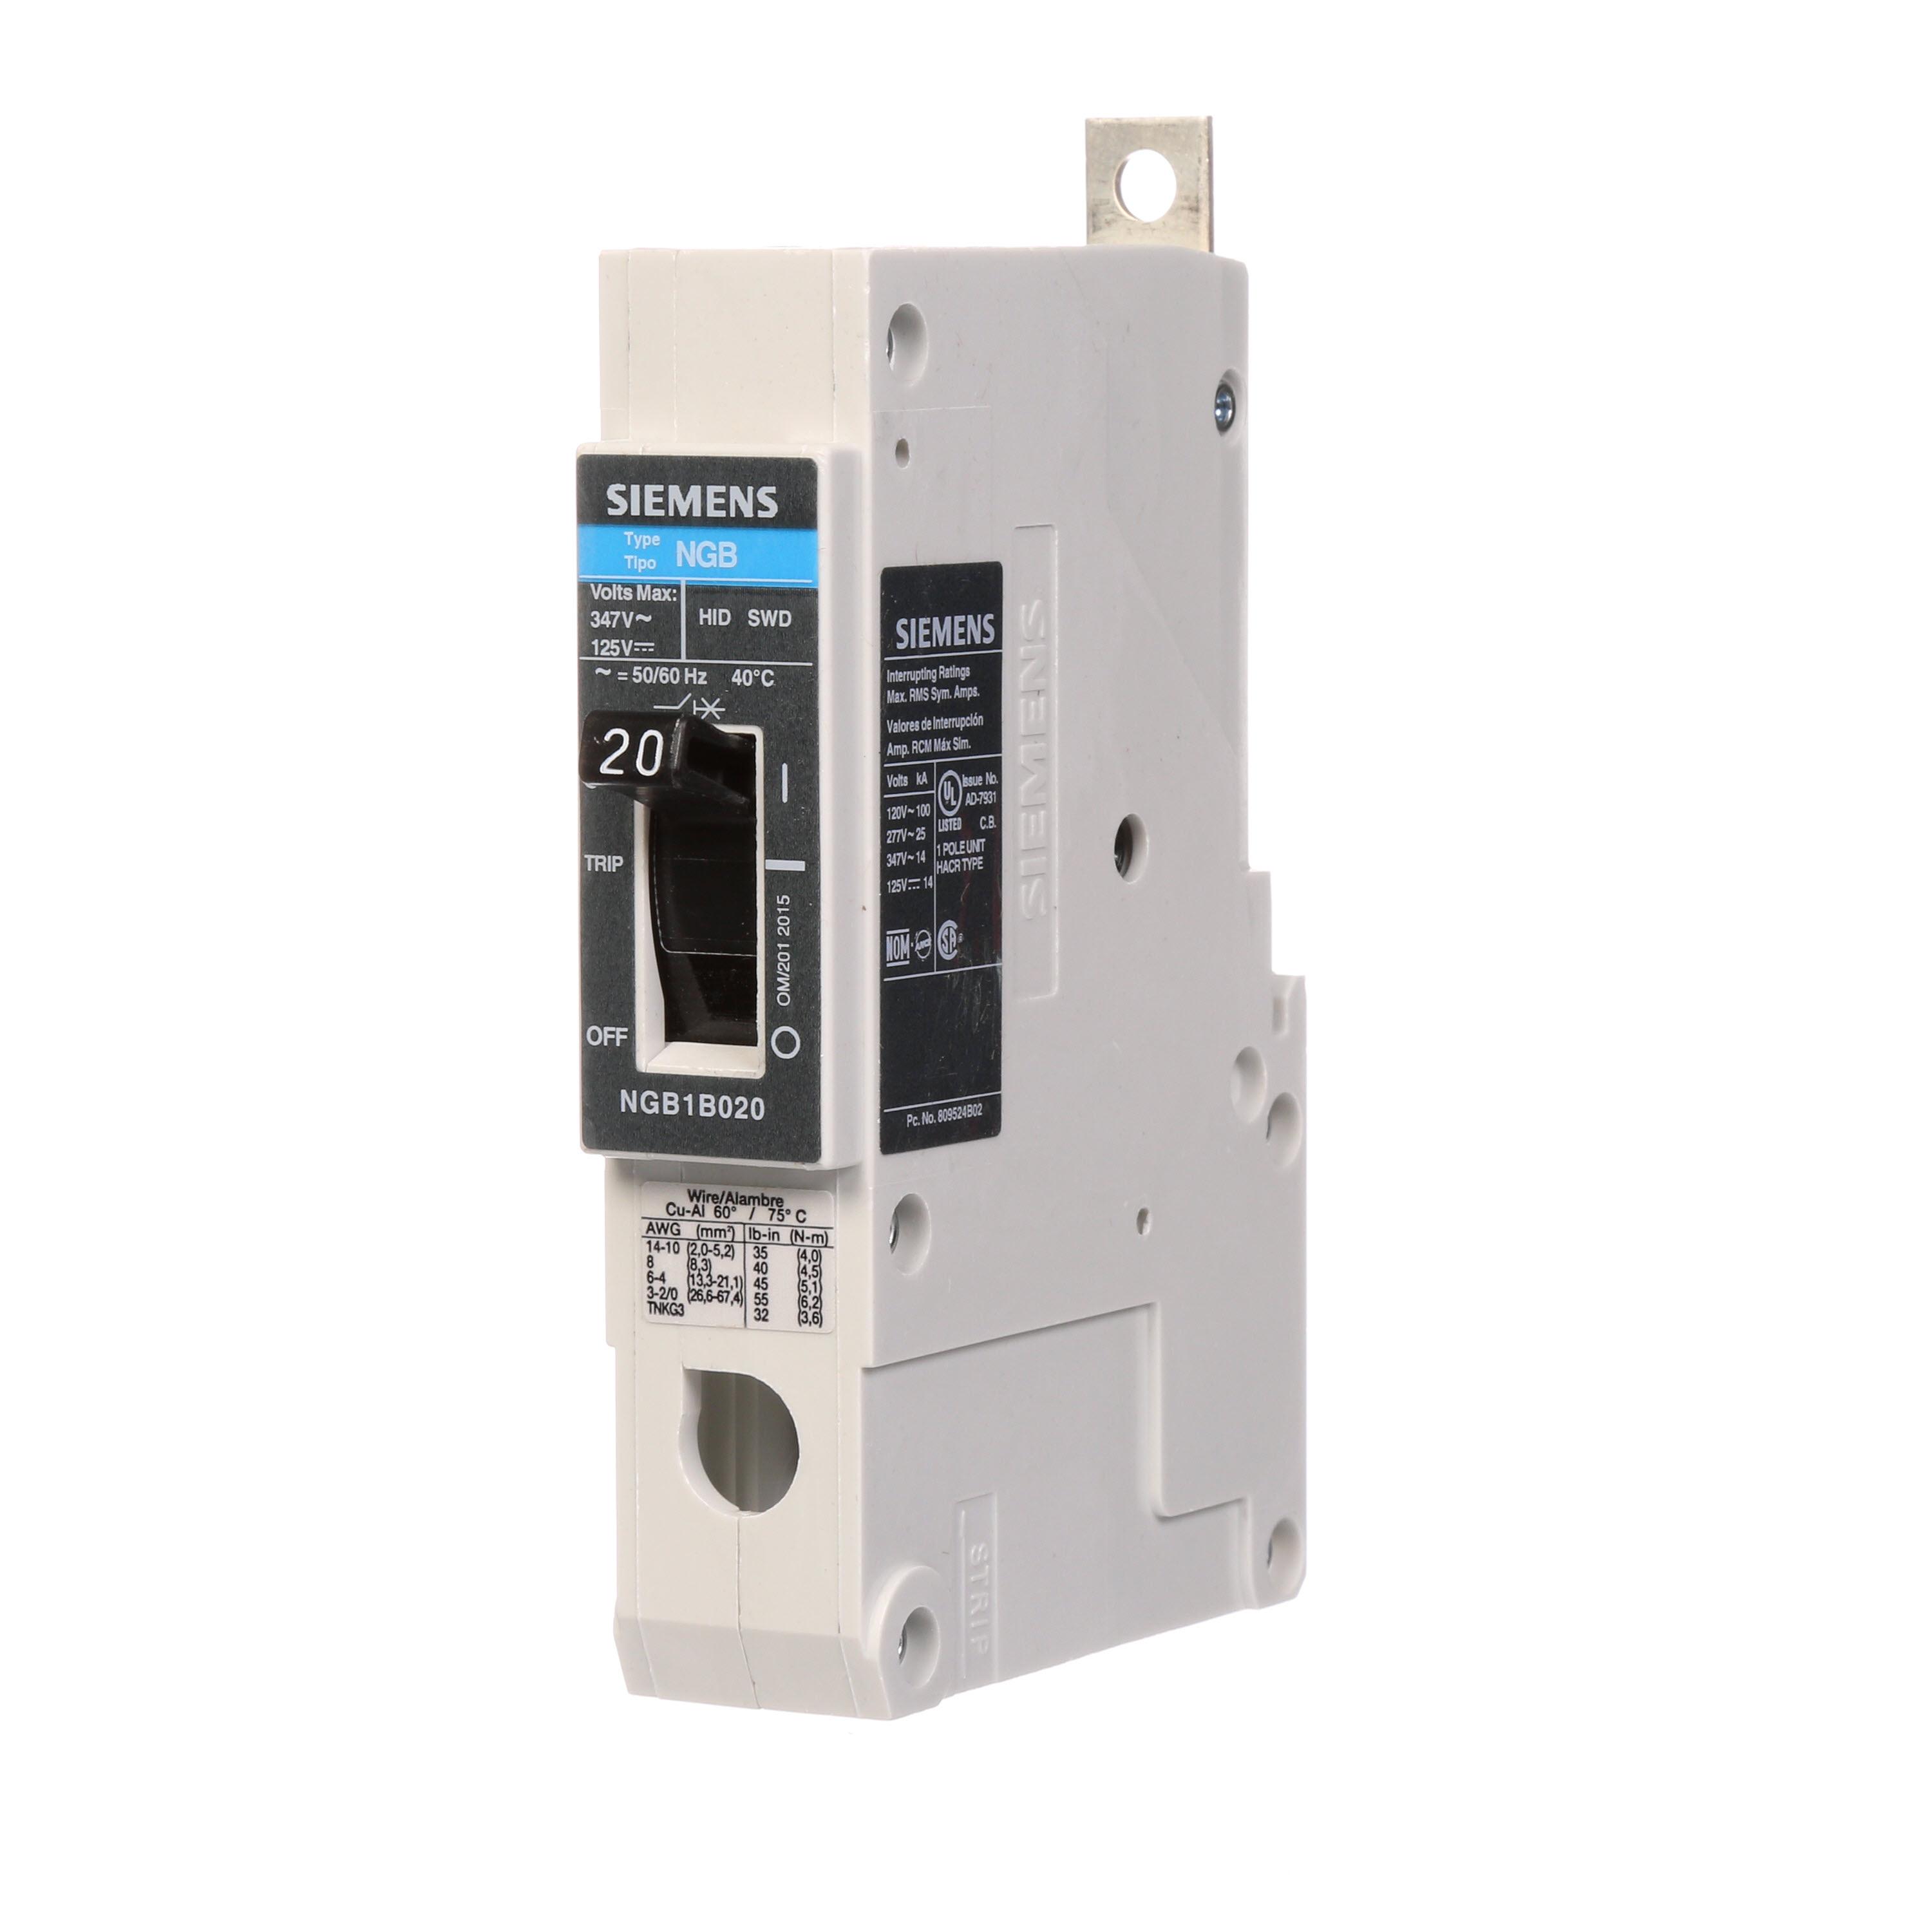 Siemens Ngb1b020 1 Pole 20 Amp Circuit Breaker for sale online 